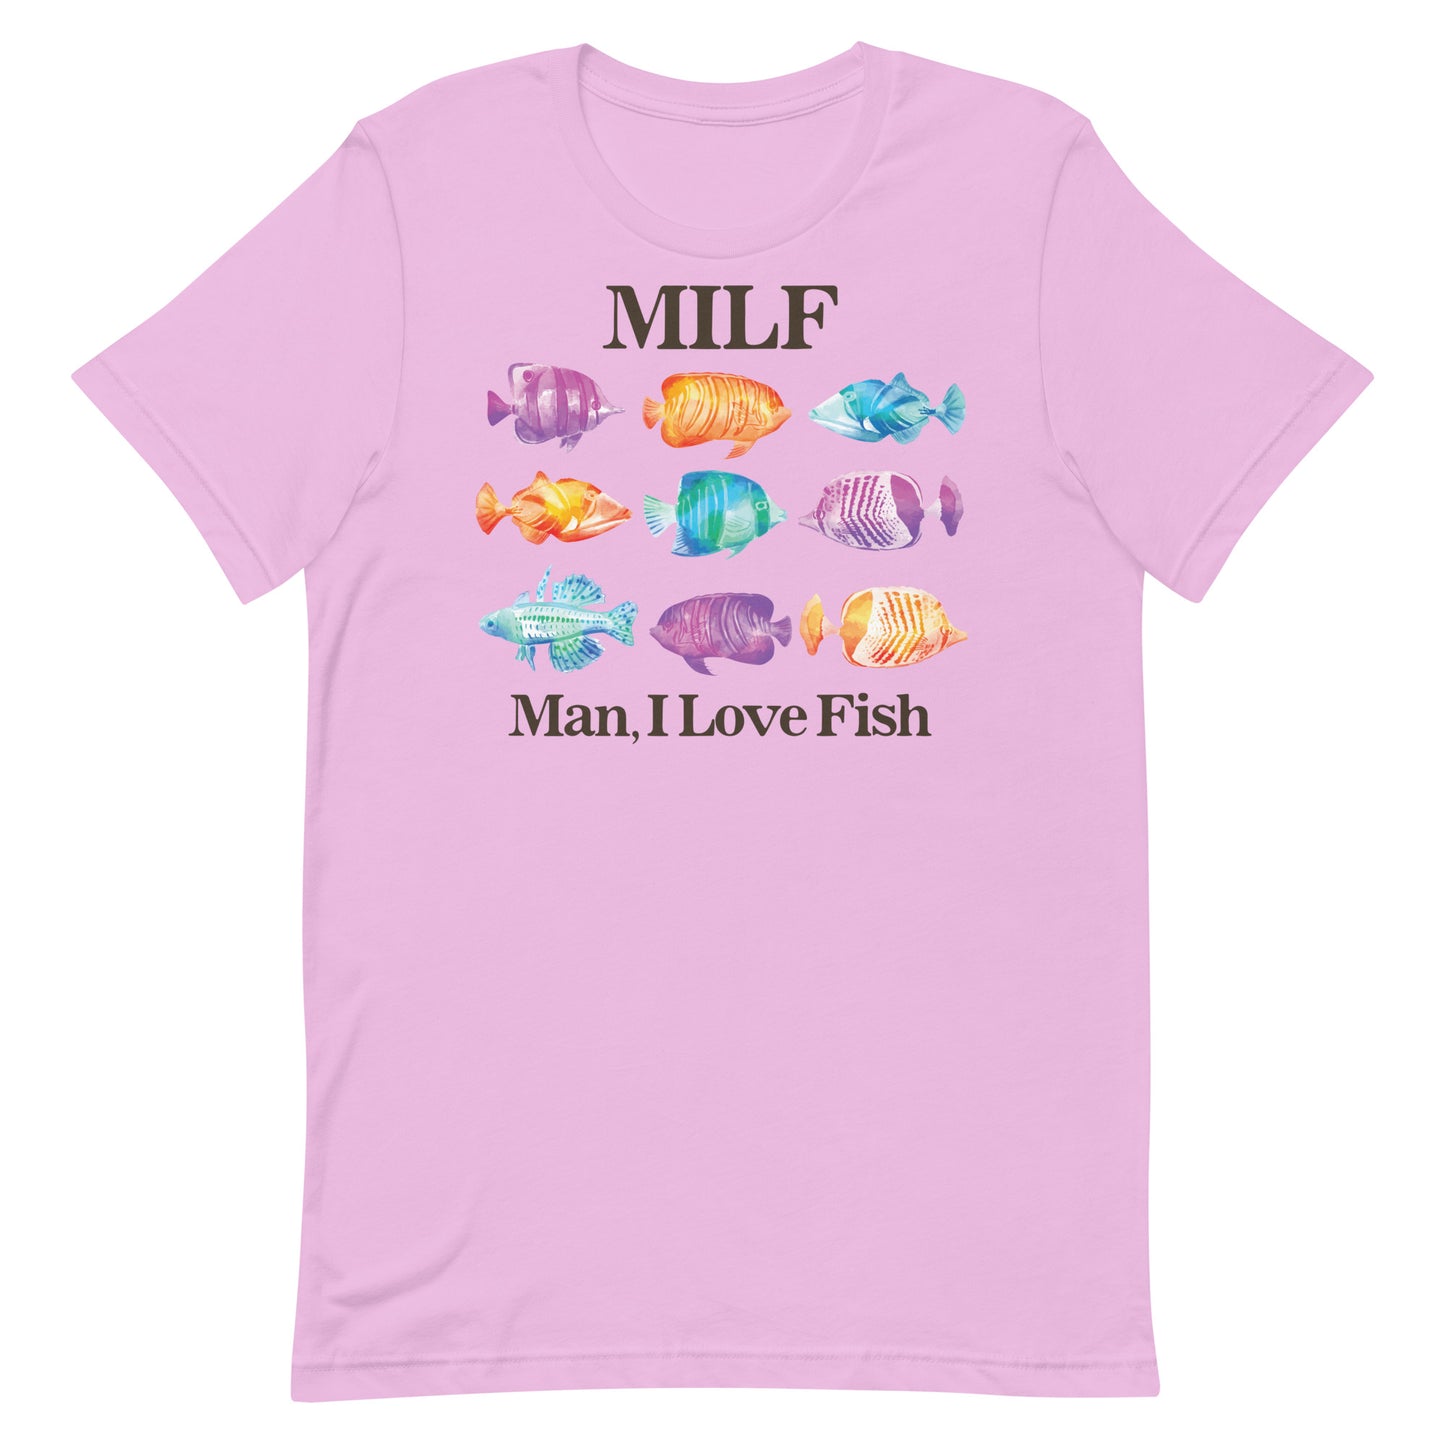 Milf Man: I Love Fishing.